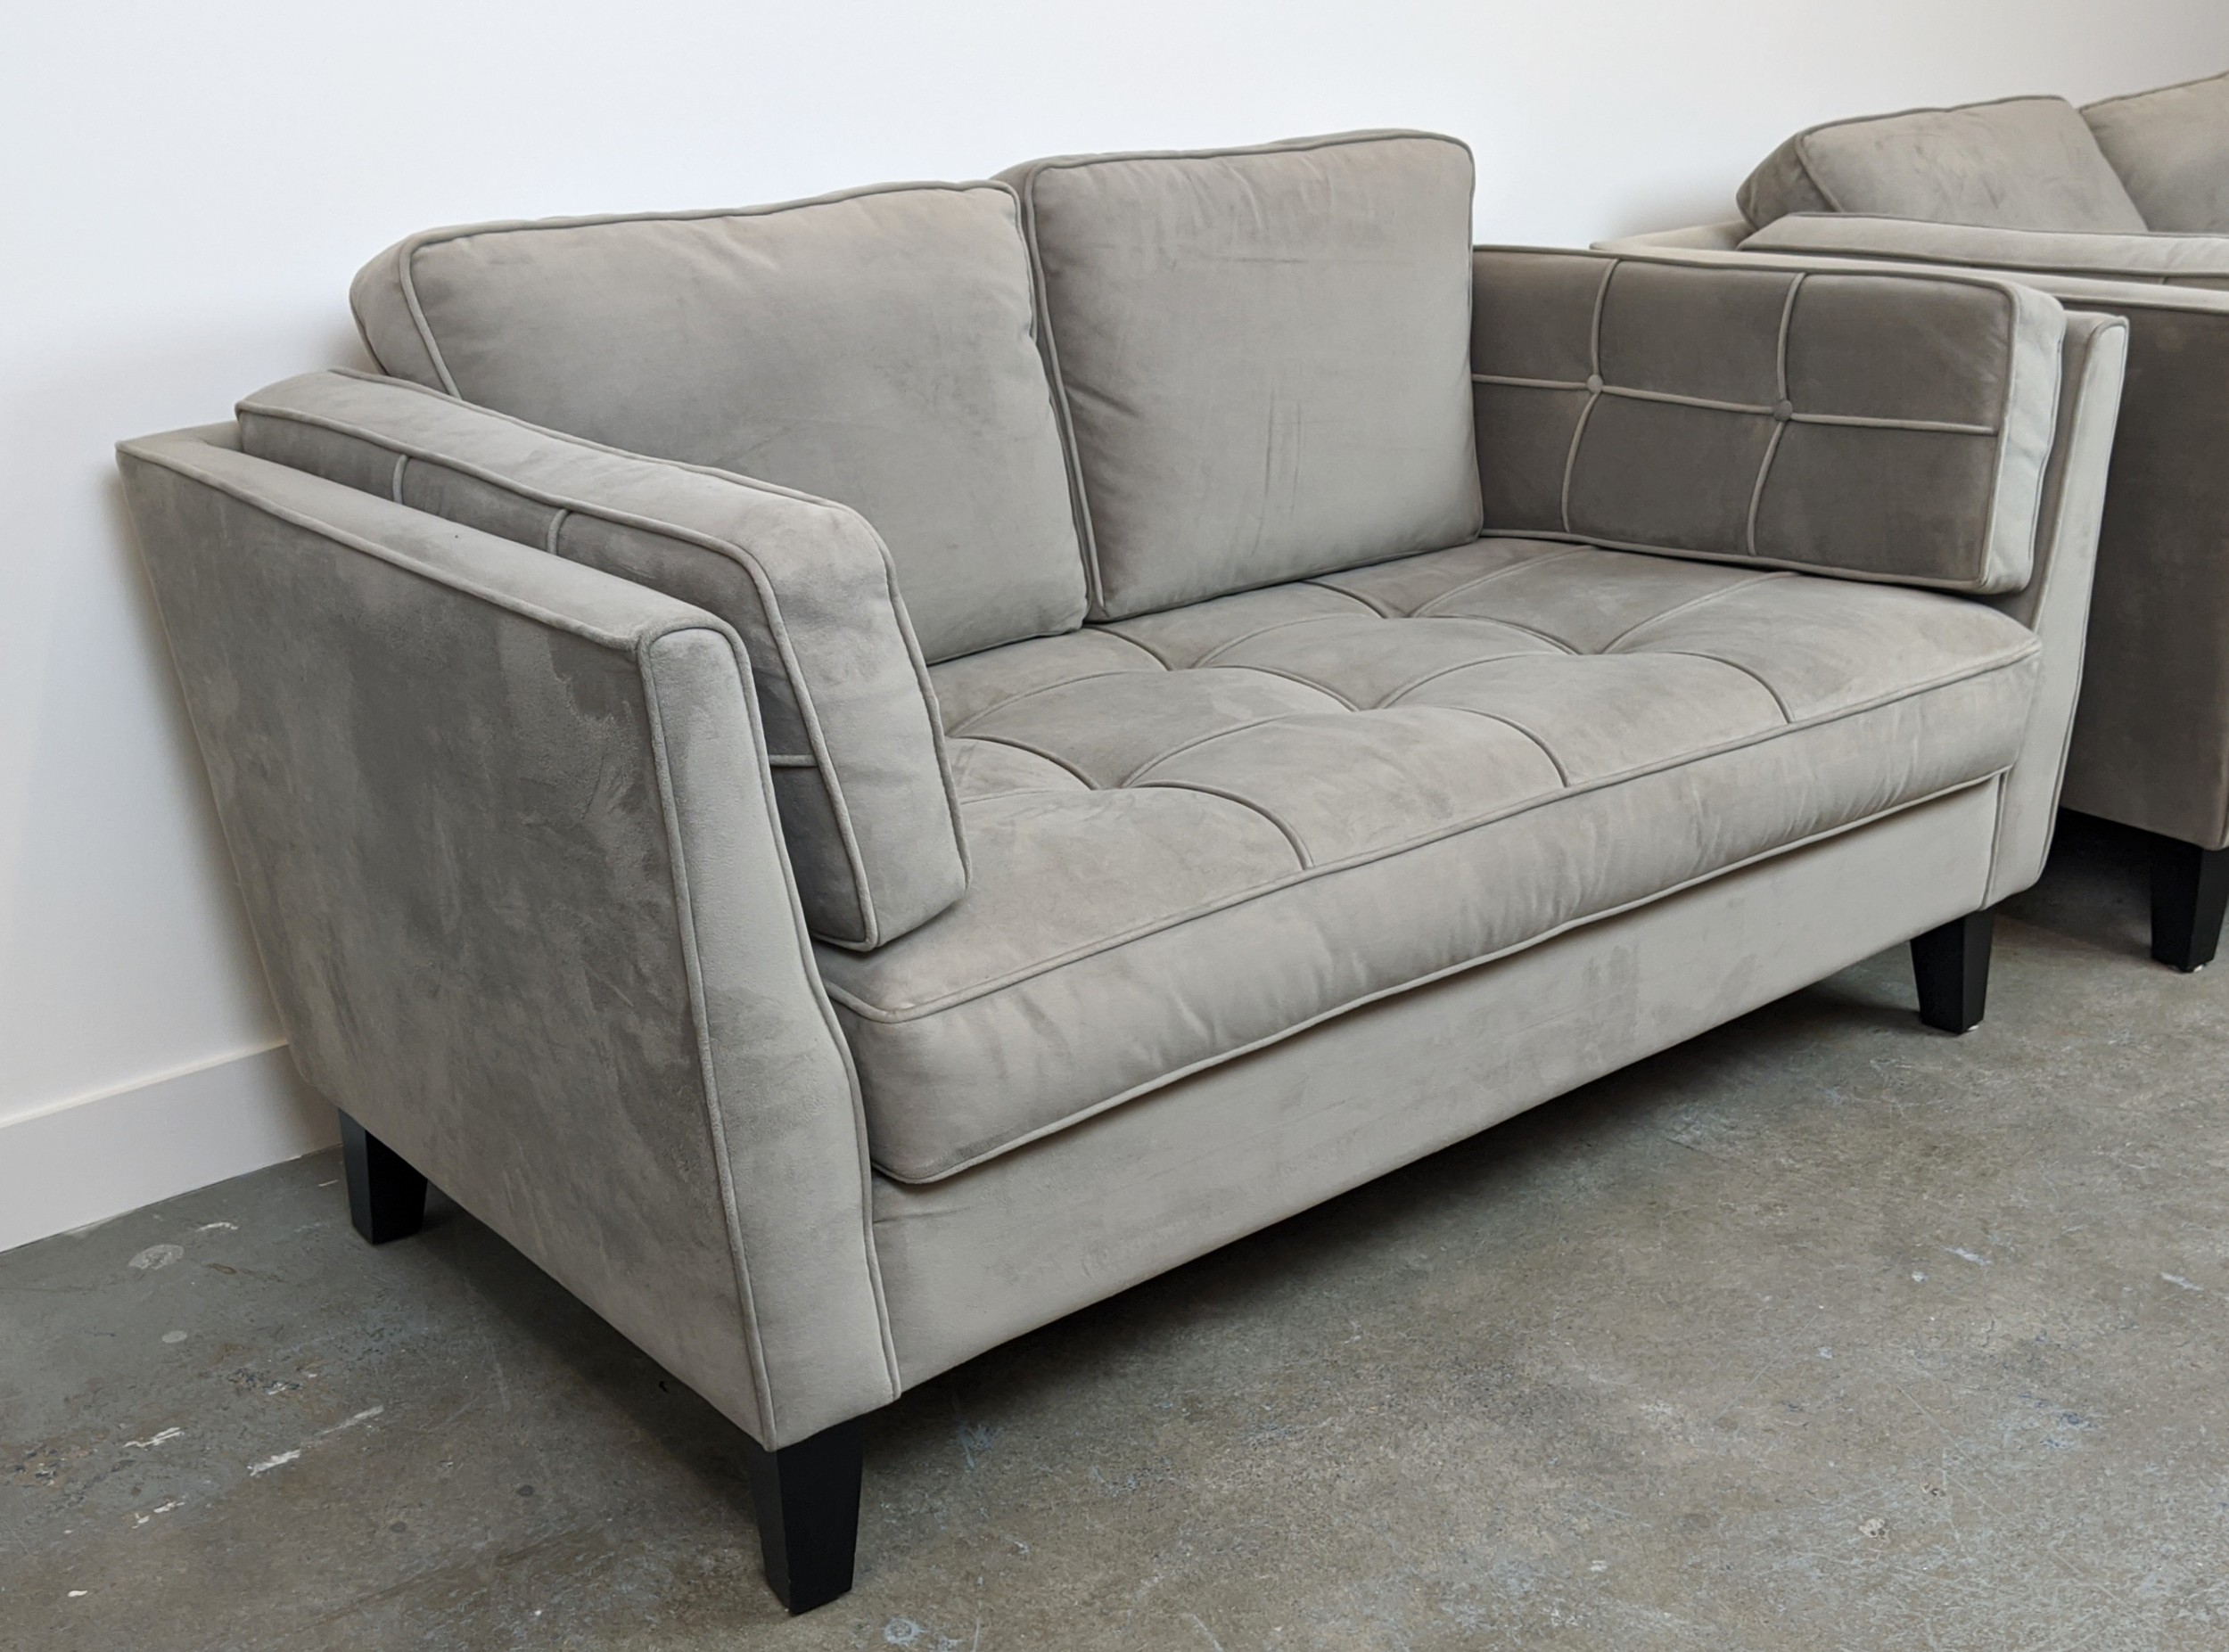 SOFA, 1960s Danish inspired, grey upholstery, 158cm W. - Image 2 of 9